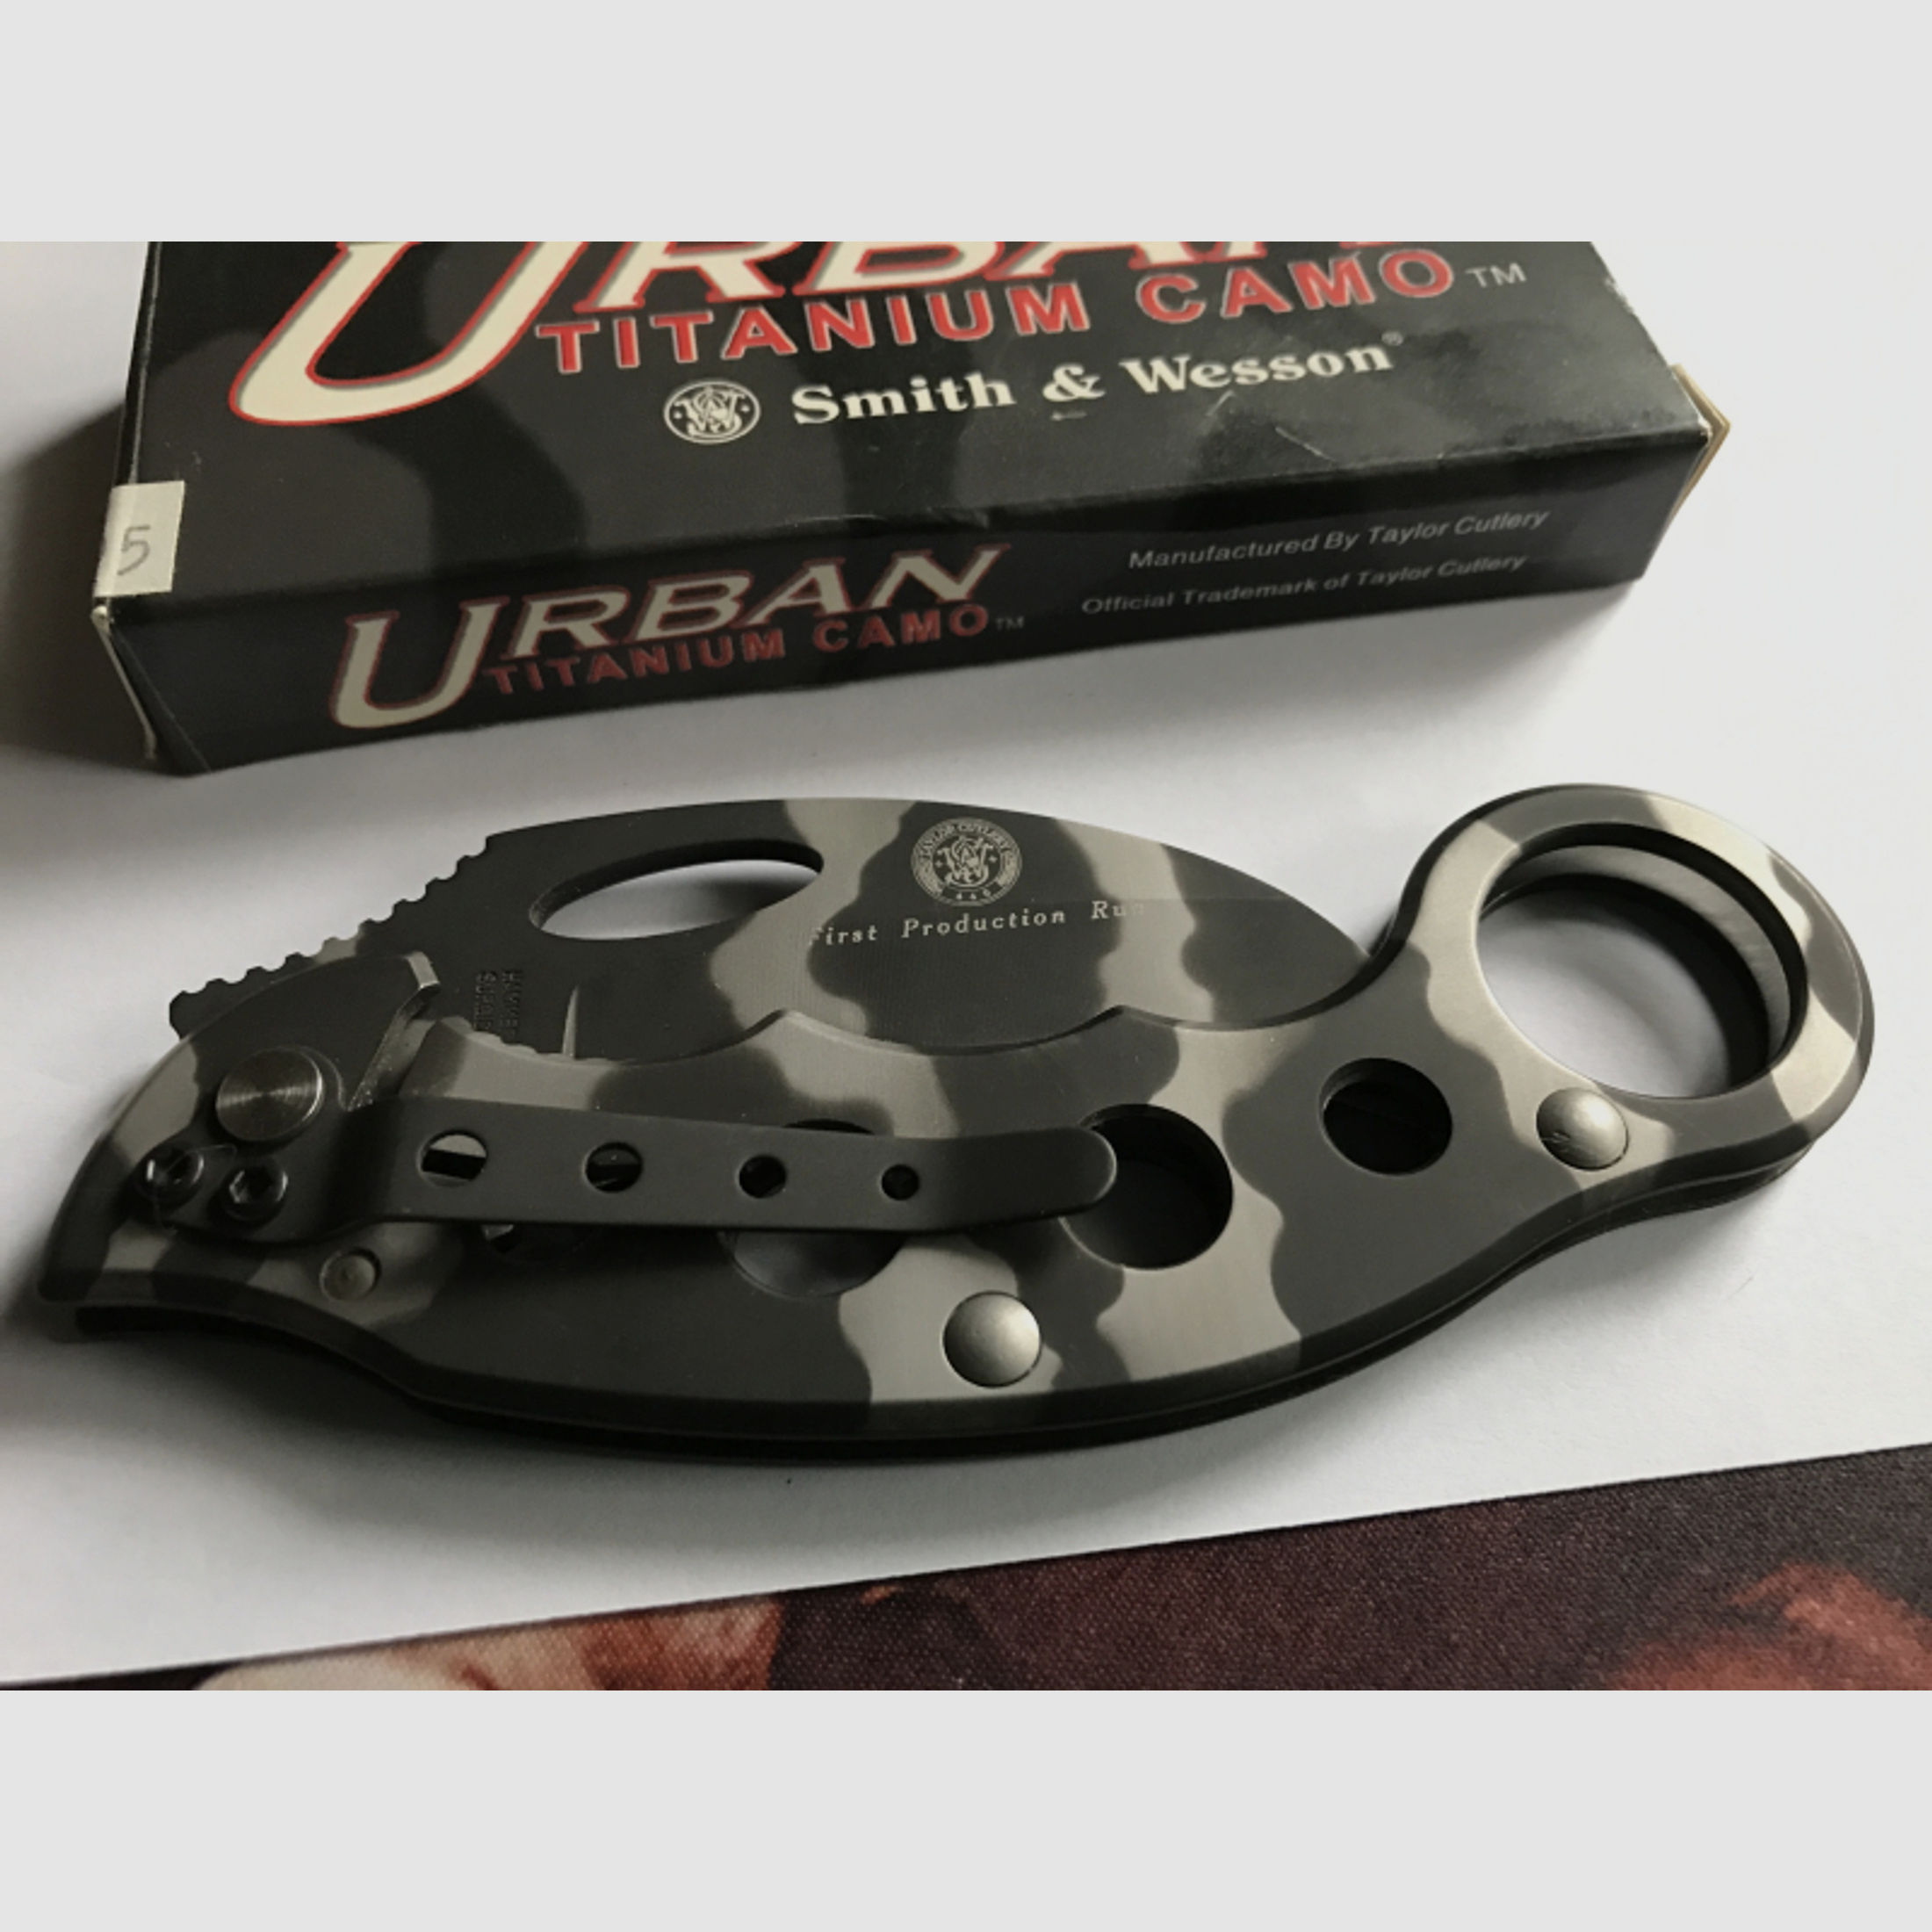 Smith&Wesson Urban Titanium Camo Extreme OPS Einhandfolder